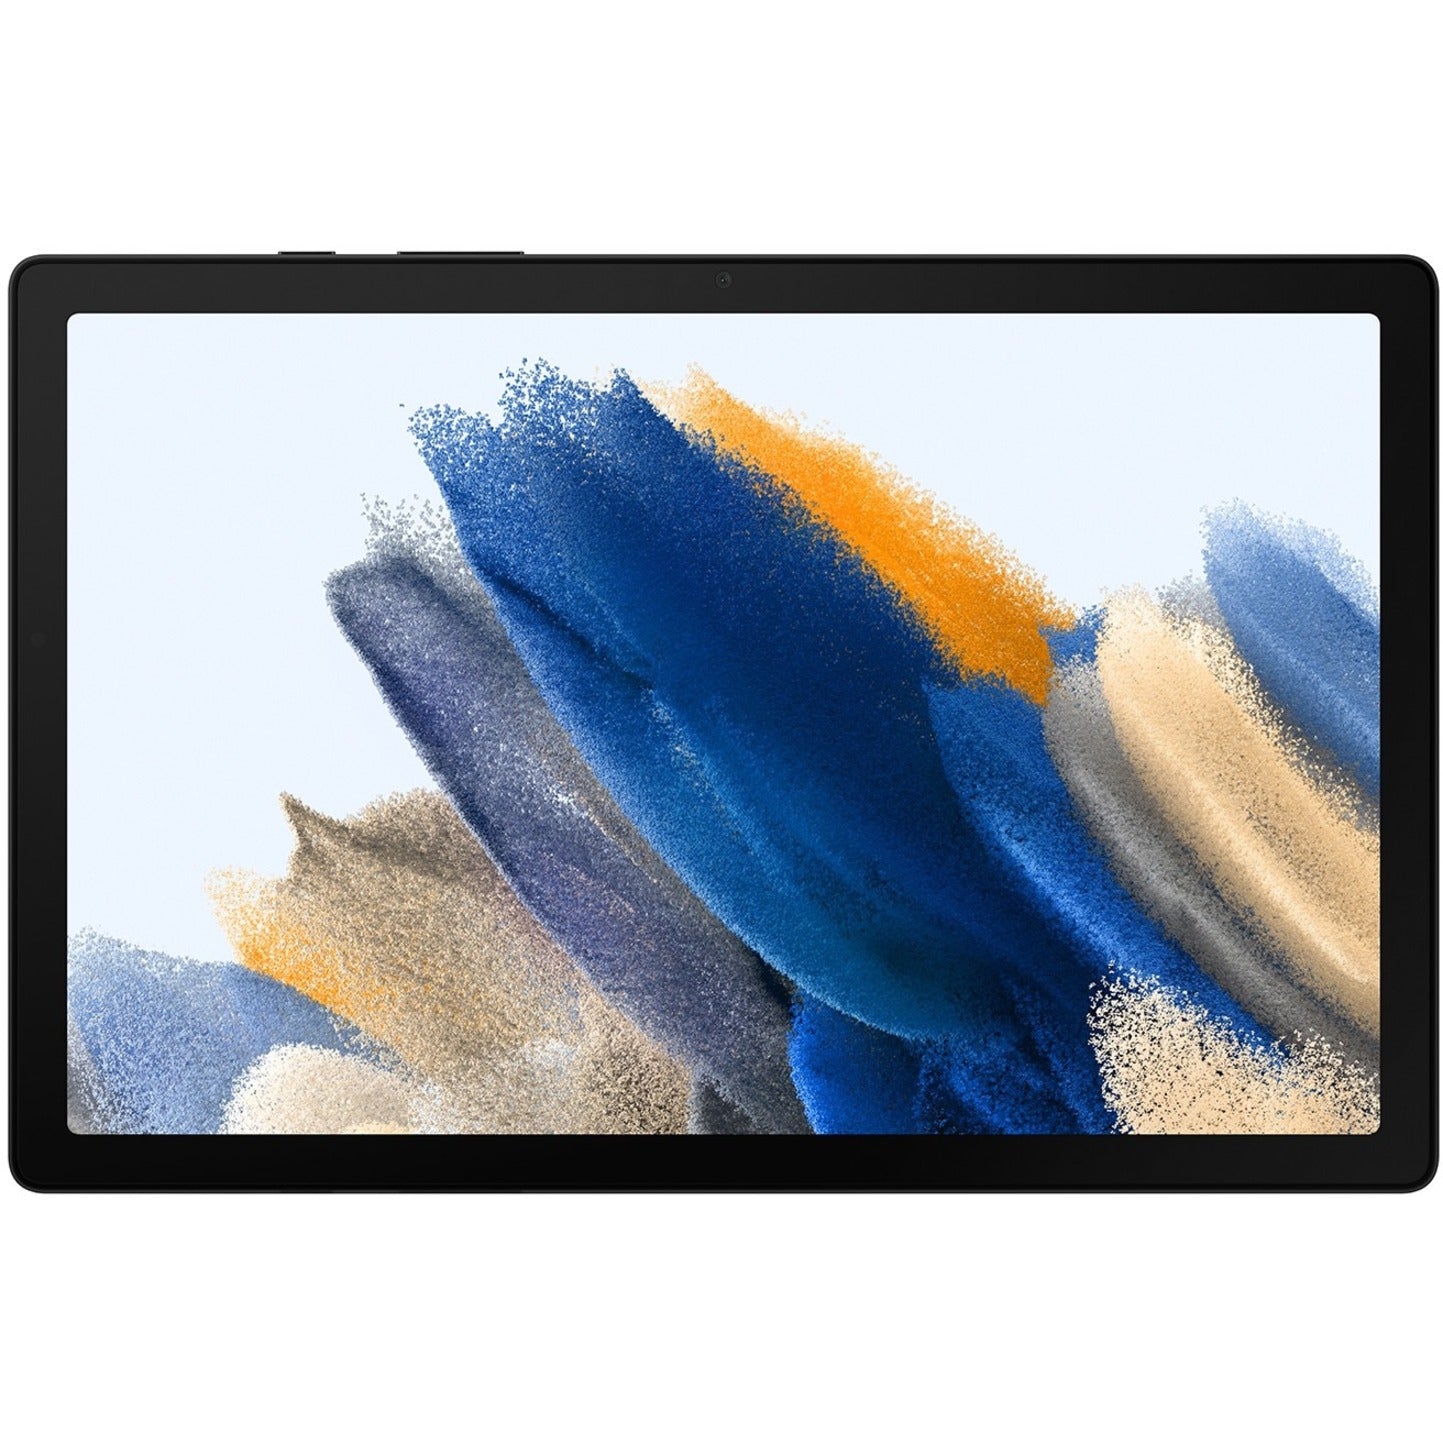 Galaxy Book 10.6”, 2-in-1 PC, Silver (64GB) Tablets - SM